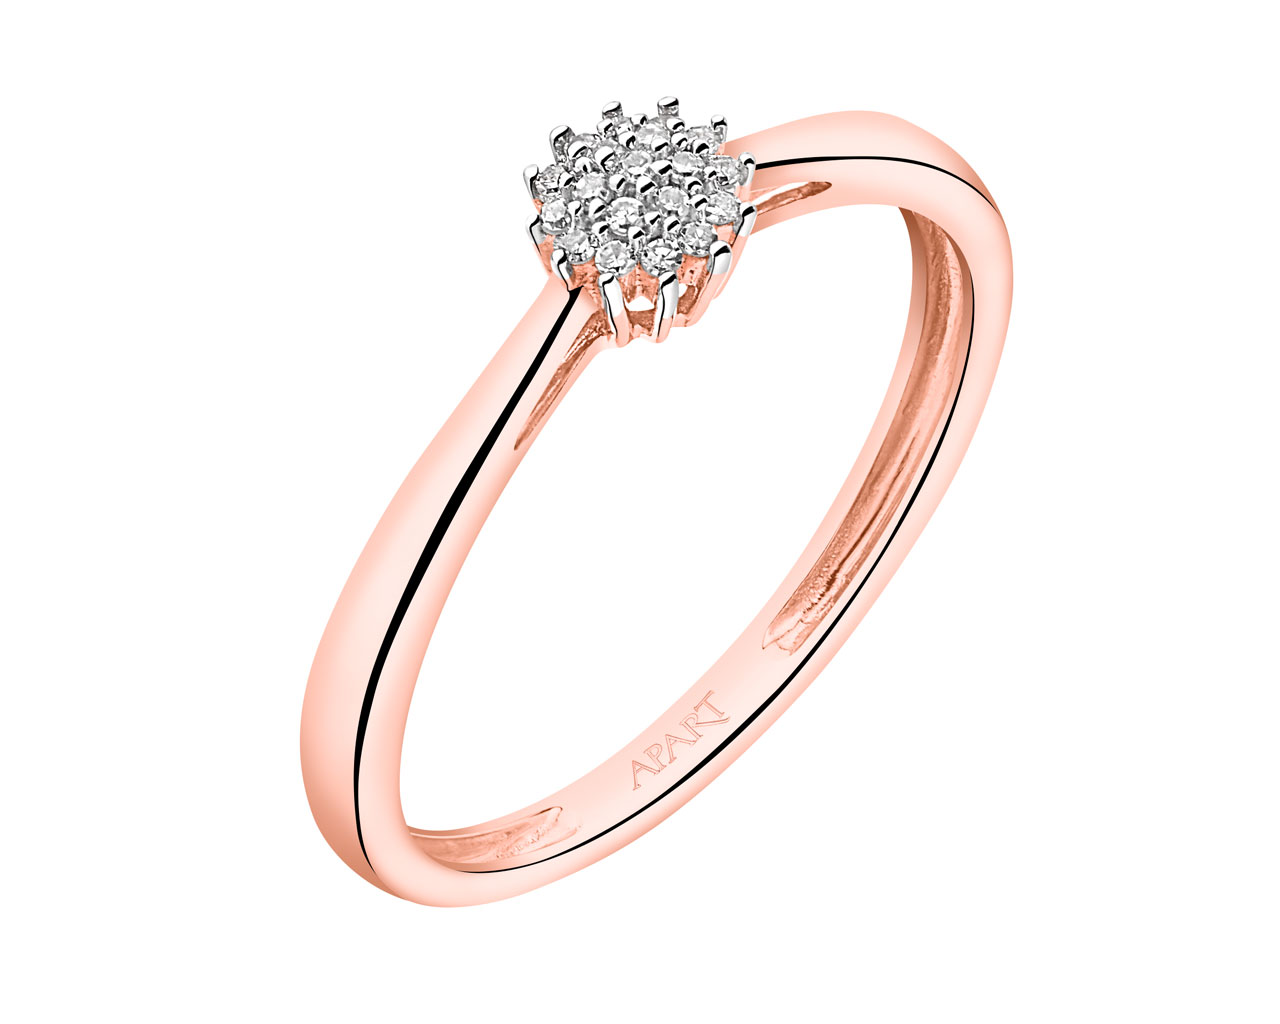 Prsten z růžového zlata s diamanty 0,05 ct - ryzost 585